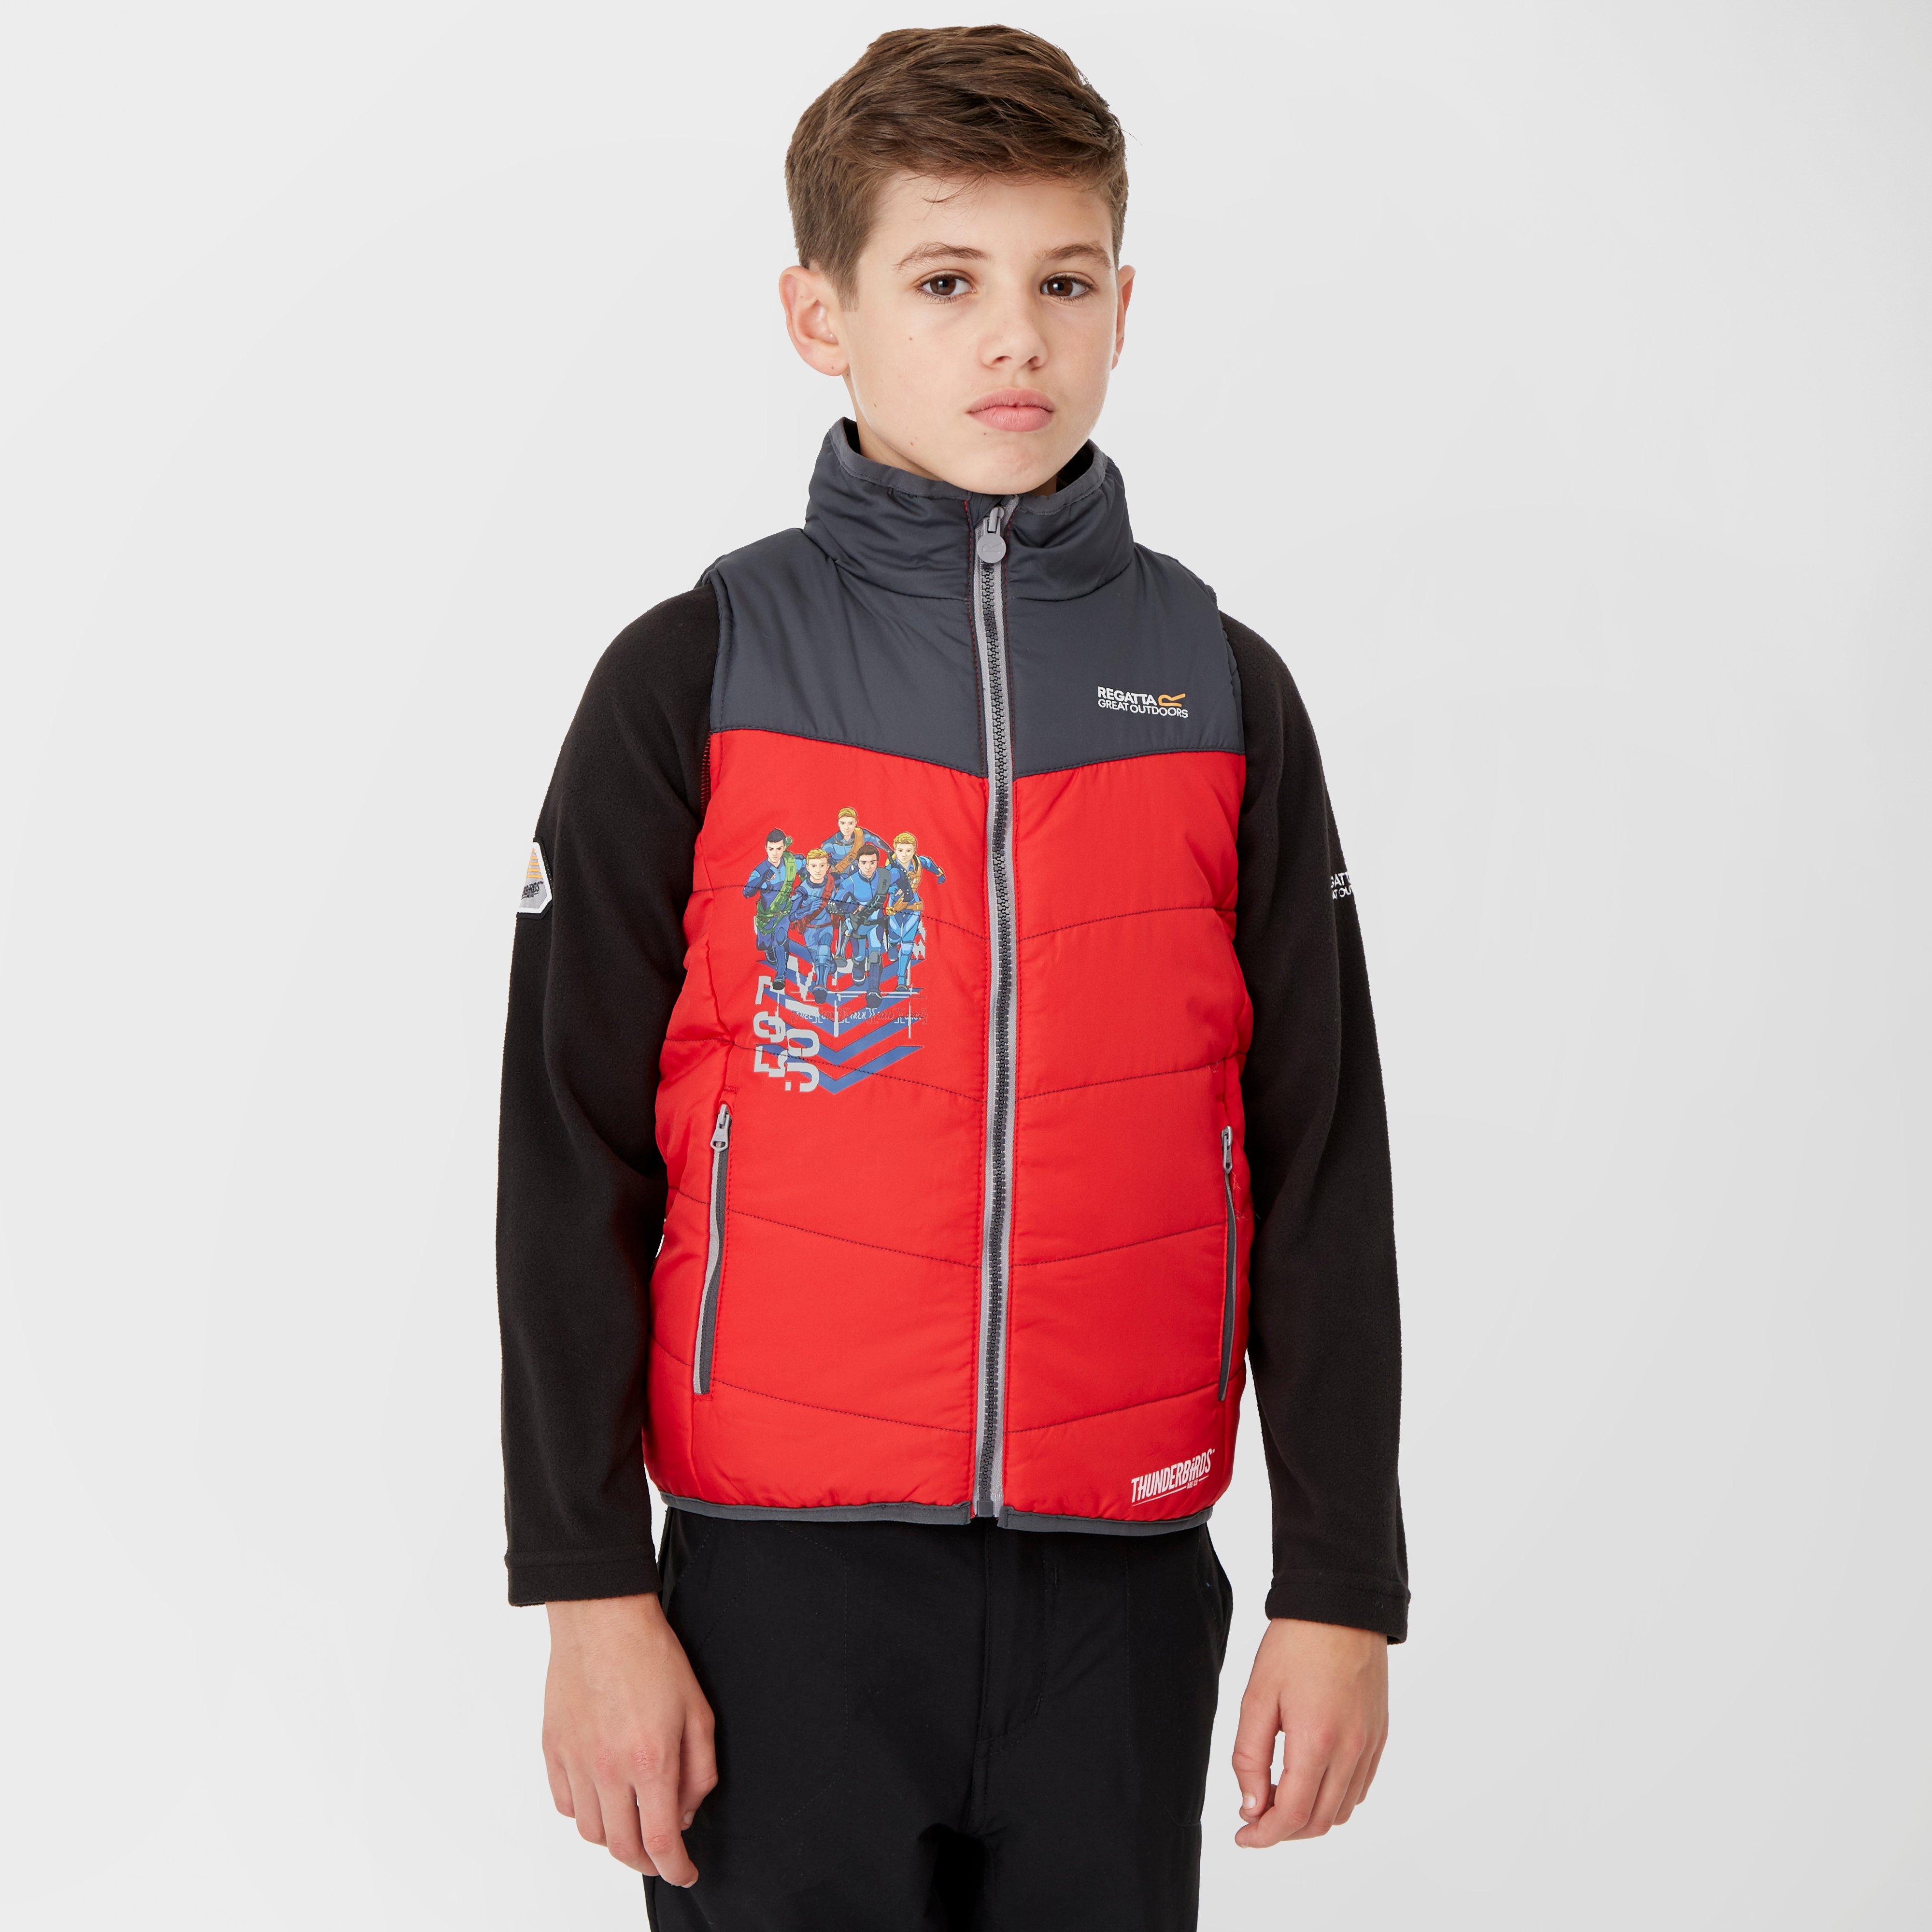 Regatta Earthbreaker Kids Boys Thunderbirds Bodywarmer Gilet Vest Jacket RRP £25 